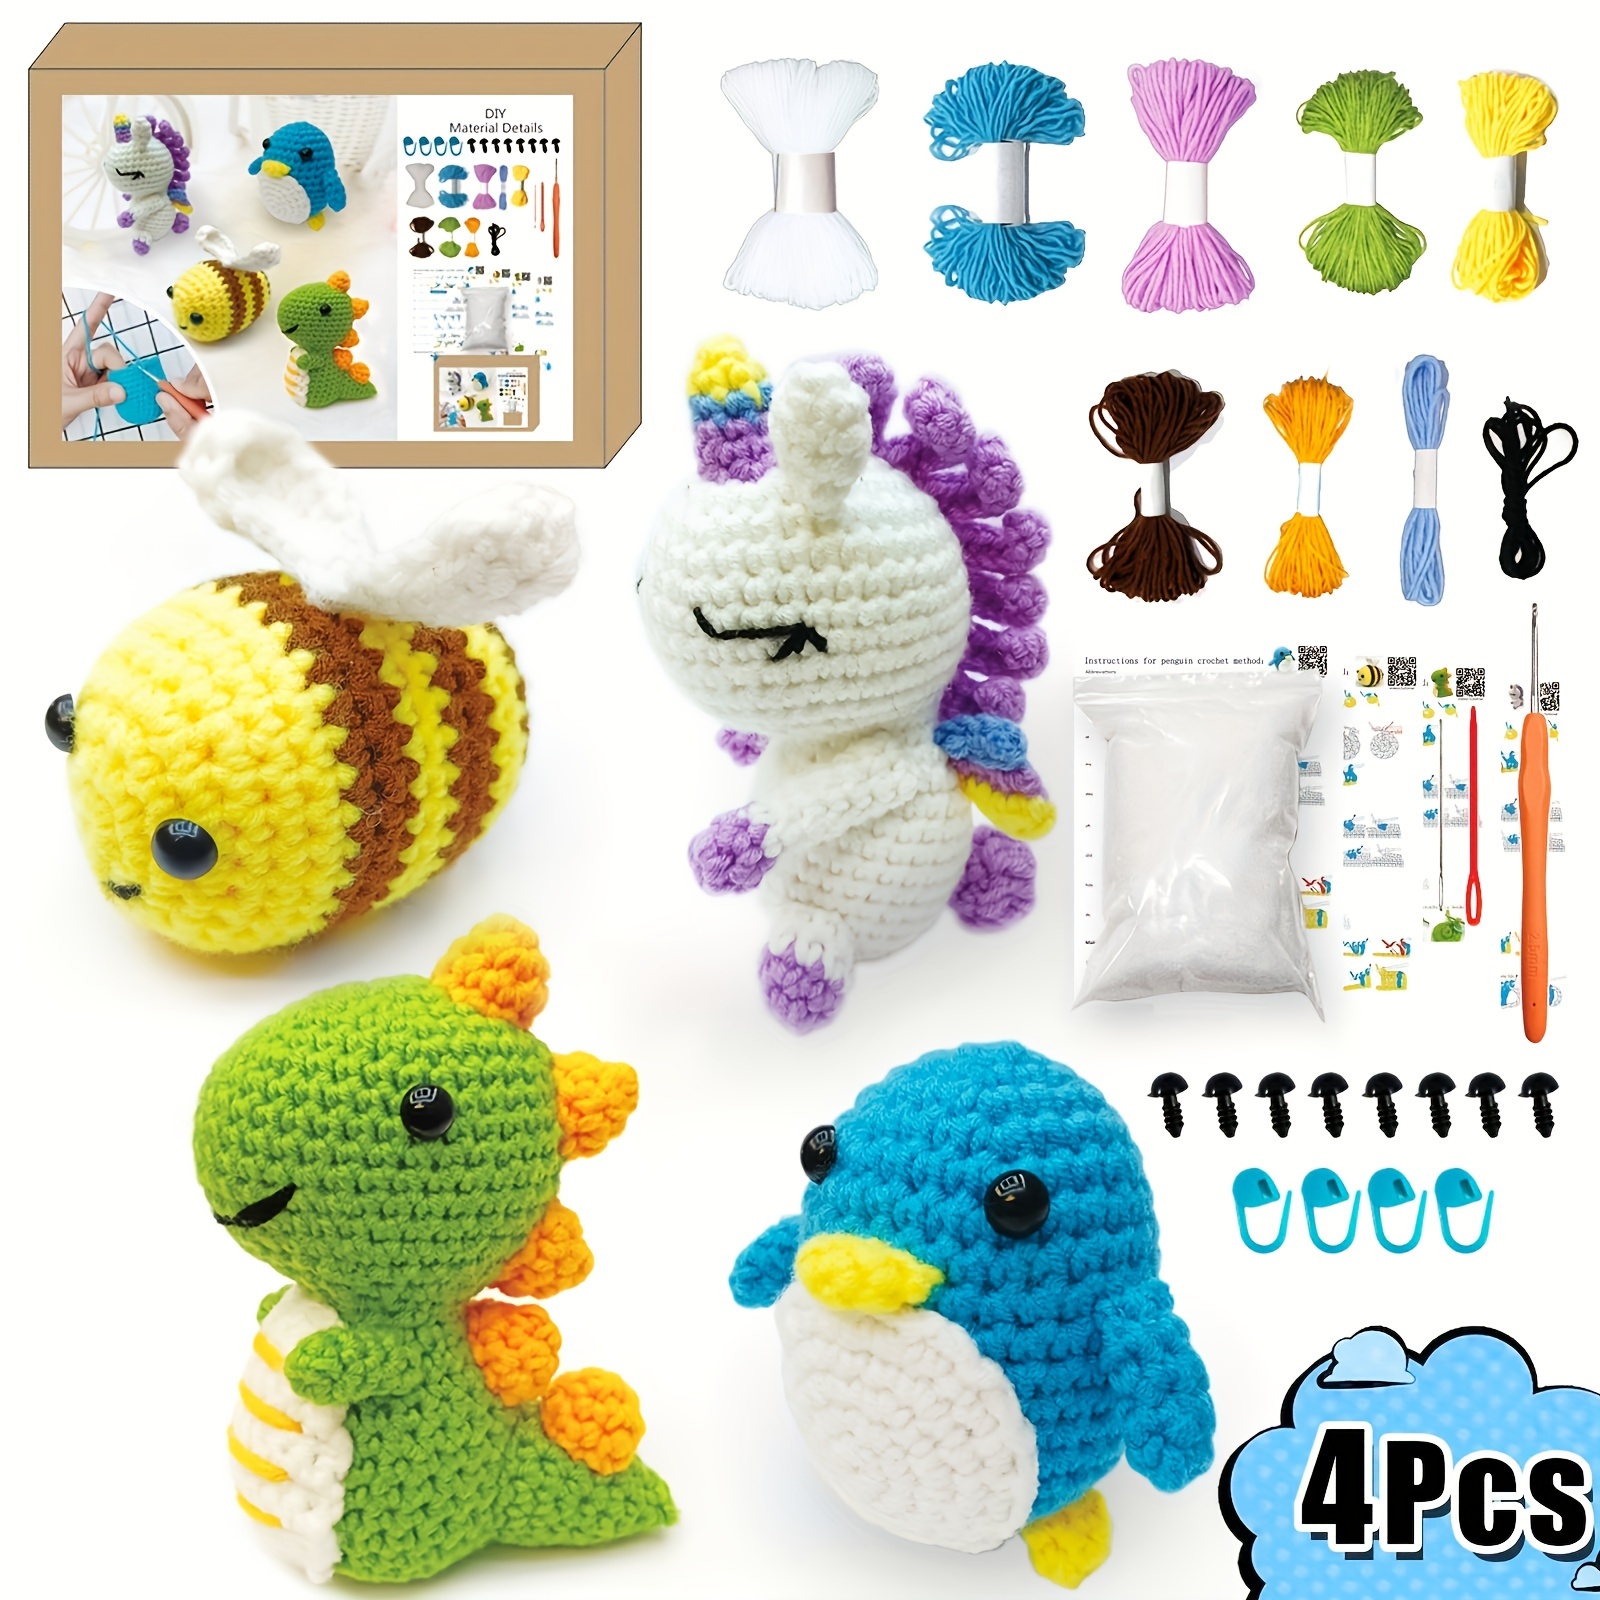 Beginner Crochet Kit, 3 Pcs Animals Crochet Knitting Crafts Kits for Kids and Adults, Size: 8.98 x 1.50 x 5.67